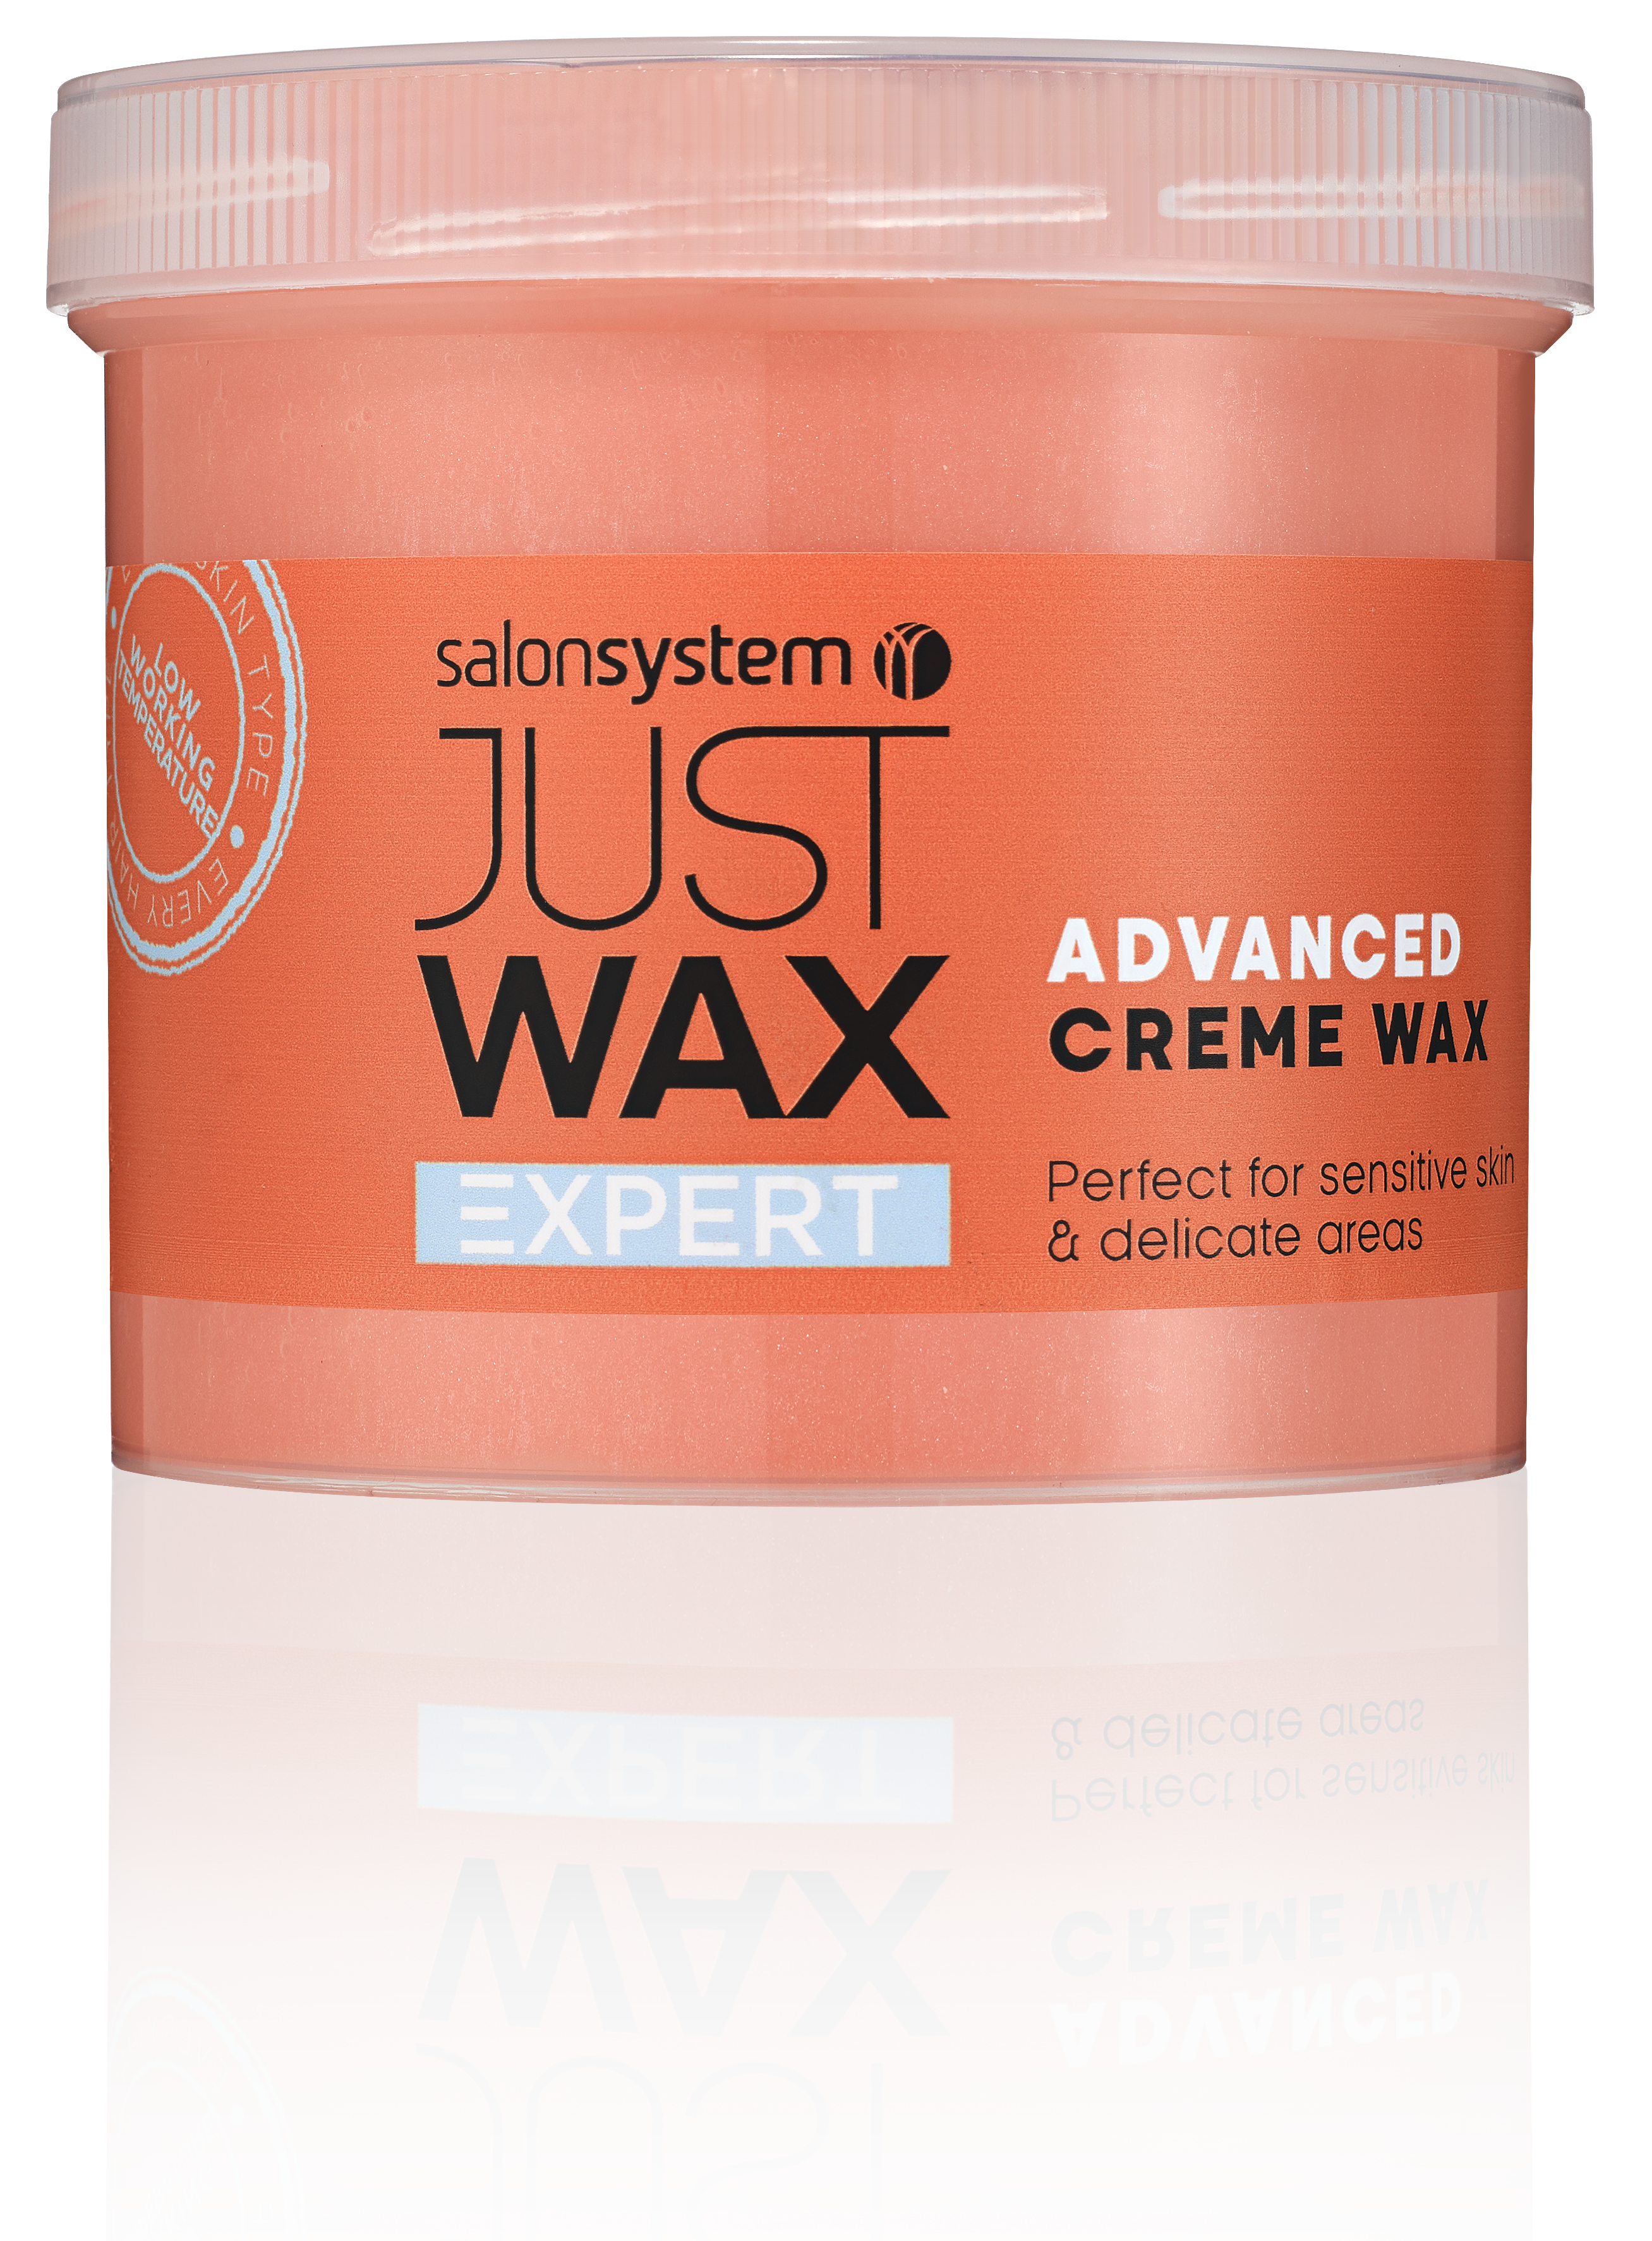 Just Wax Expert Advanced Creme Wax 